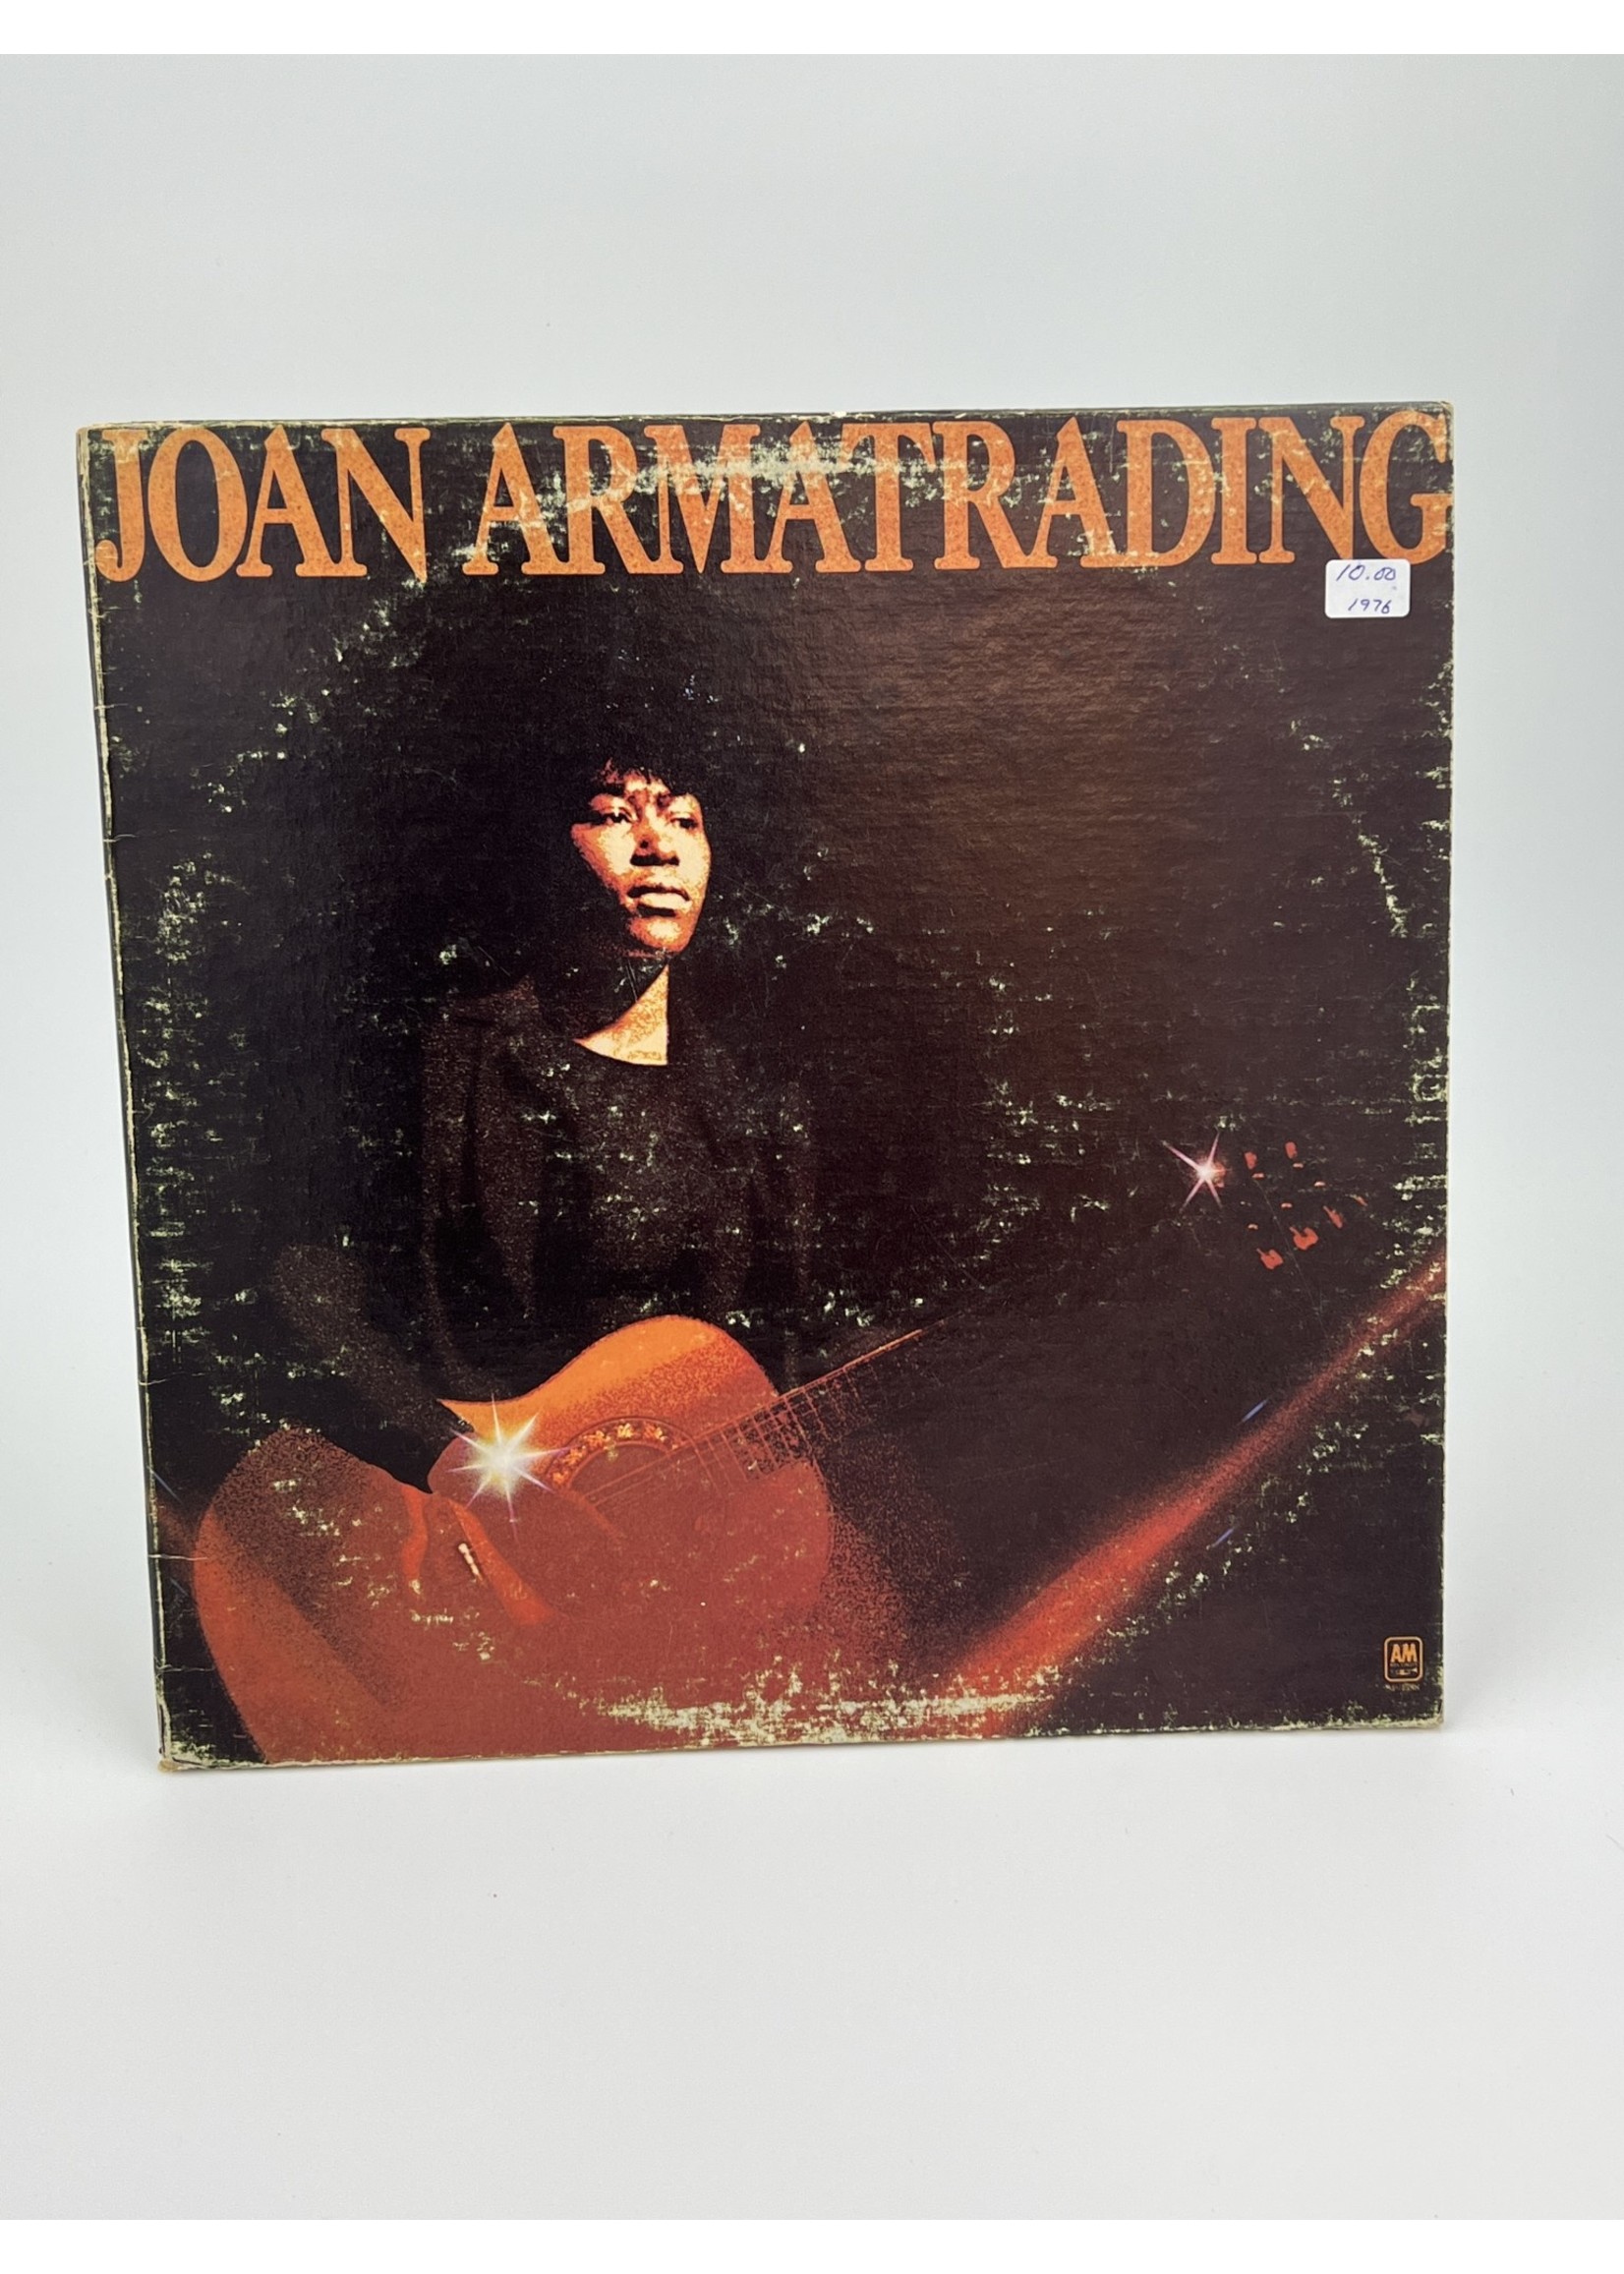 LP Joan Armatrading LP Record